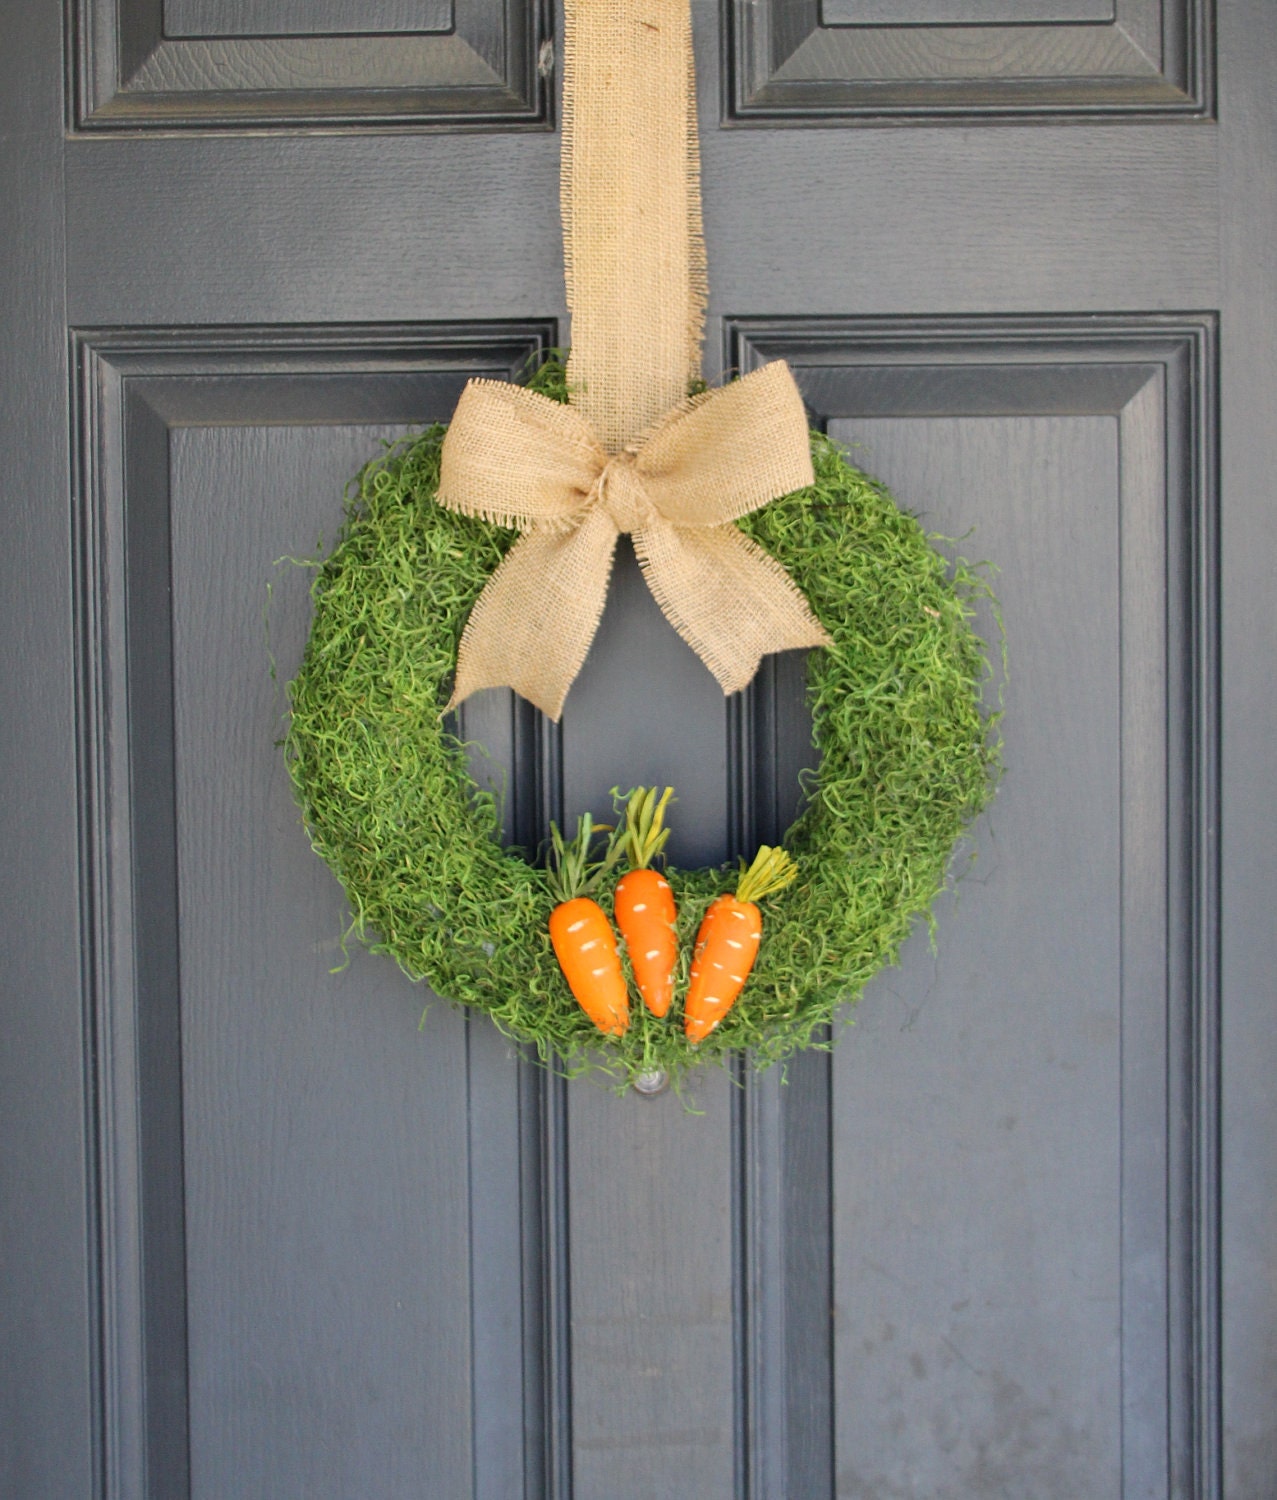 EASTER WREATH - Spring Wreath - Moss Wreath -burlap bow, and carrots